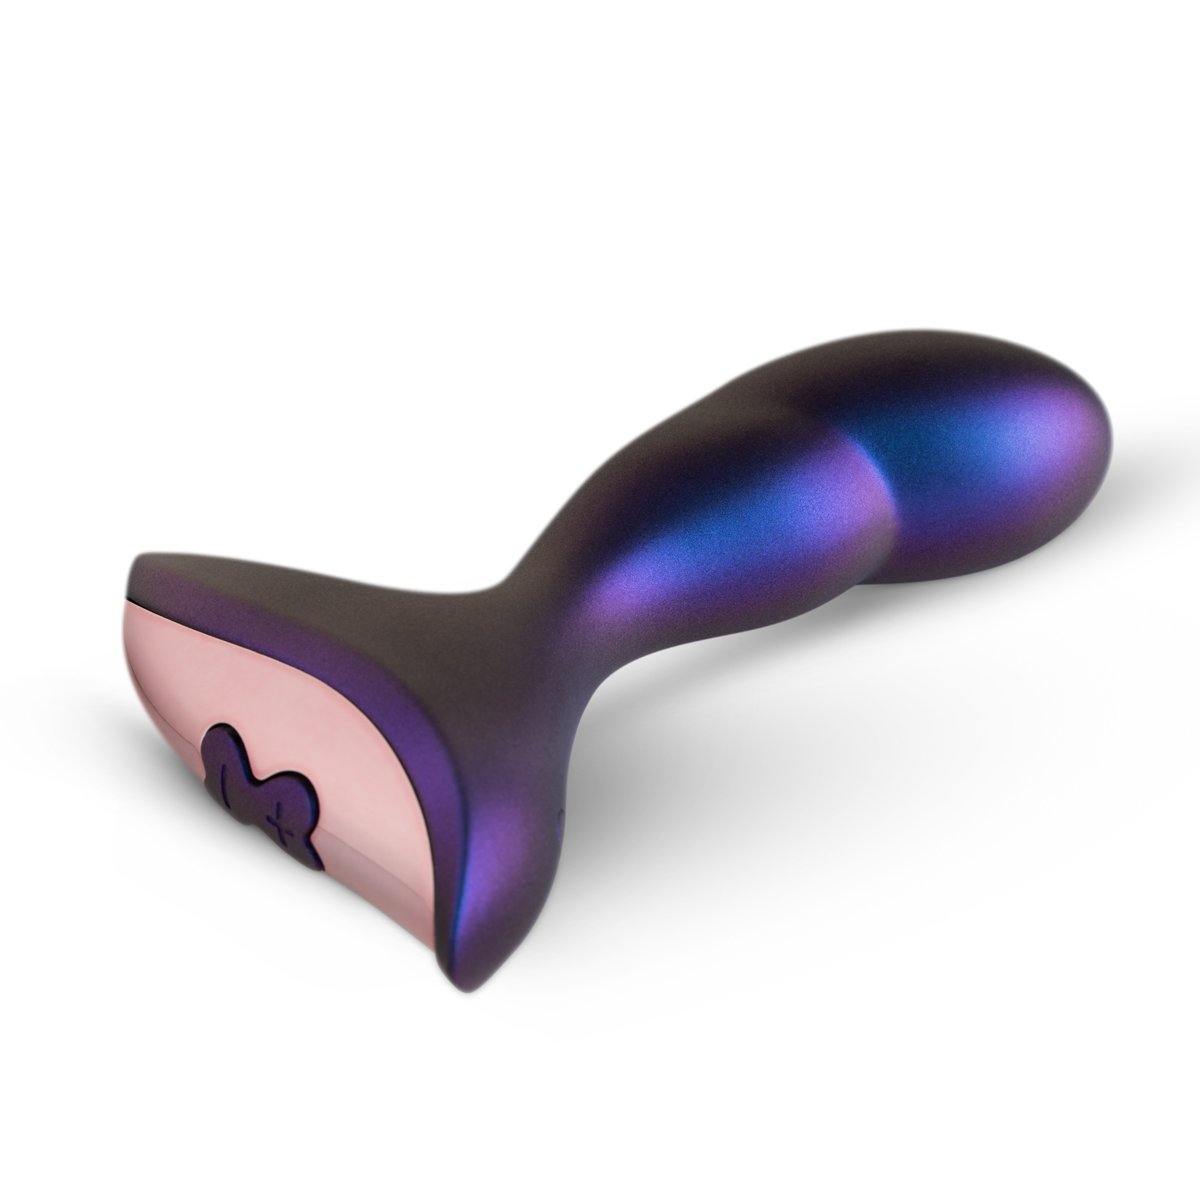 Hueman Intergalactic Anal Vibrator - Buy At Luxury Toy X - Free 3-Day Shipping